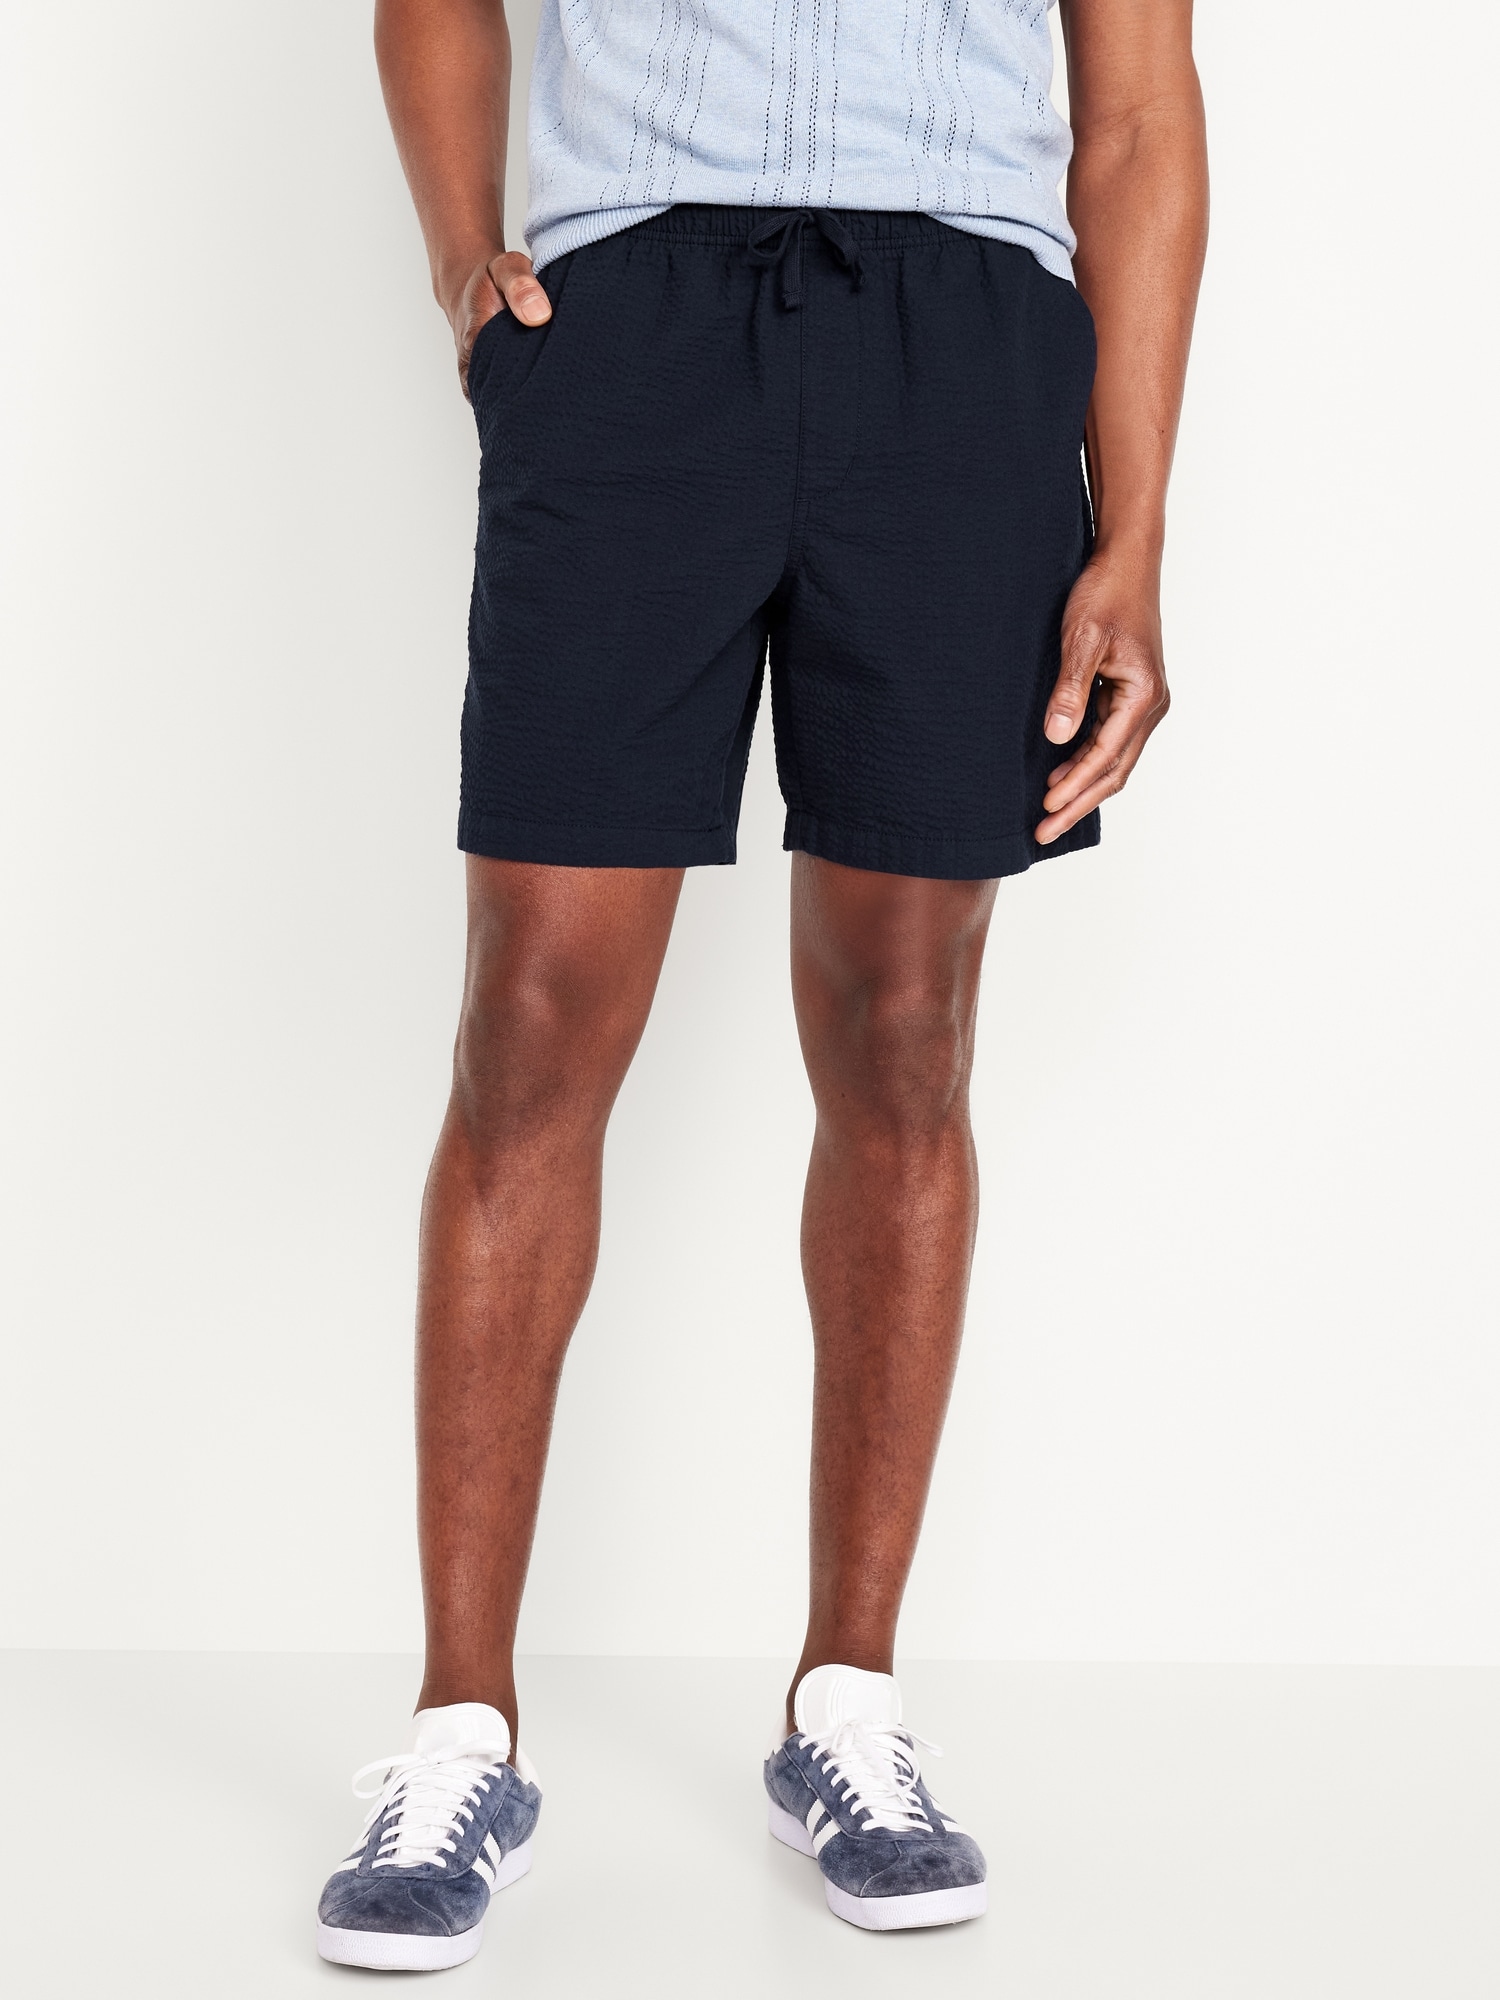 Seersucker Jogger Shorts -- 7-inch inseam Hot Deal